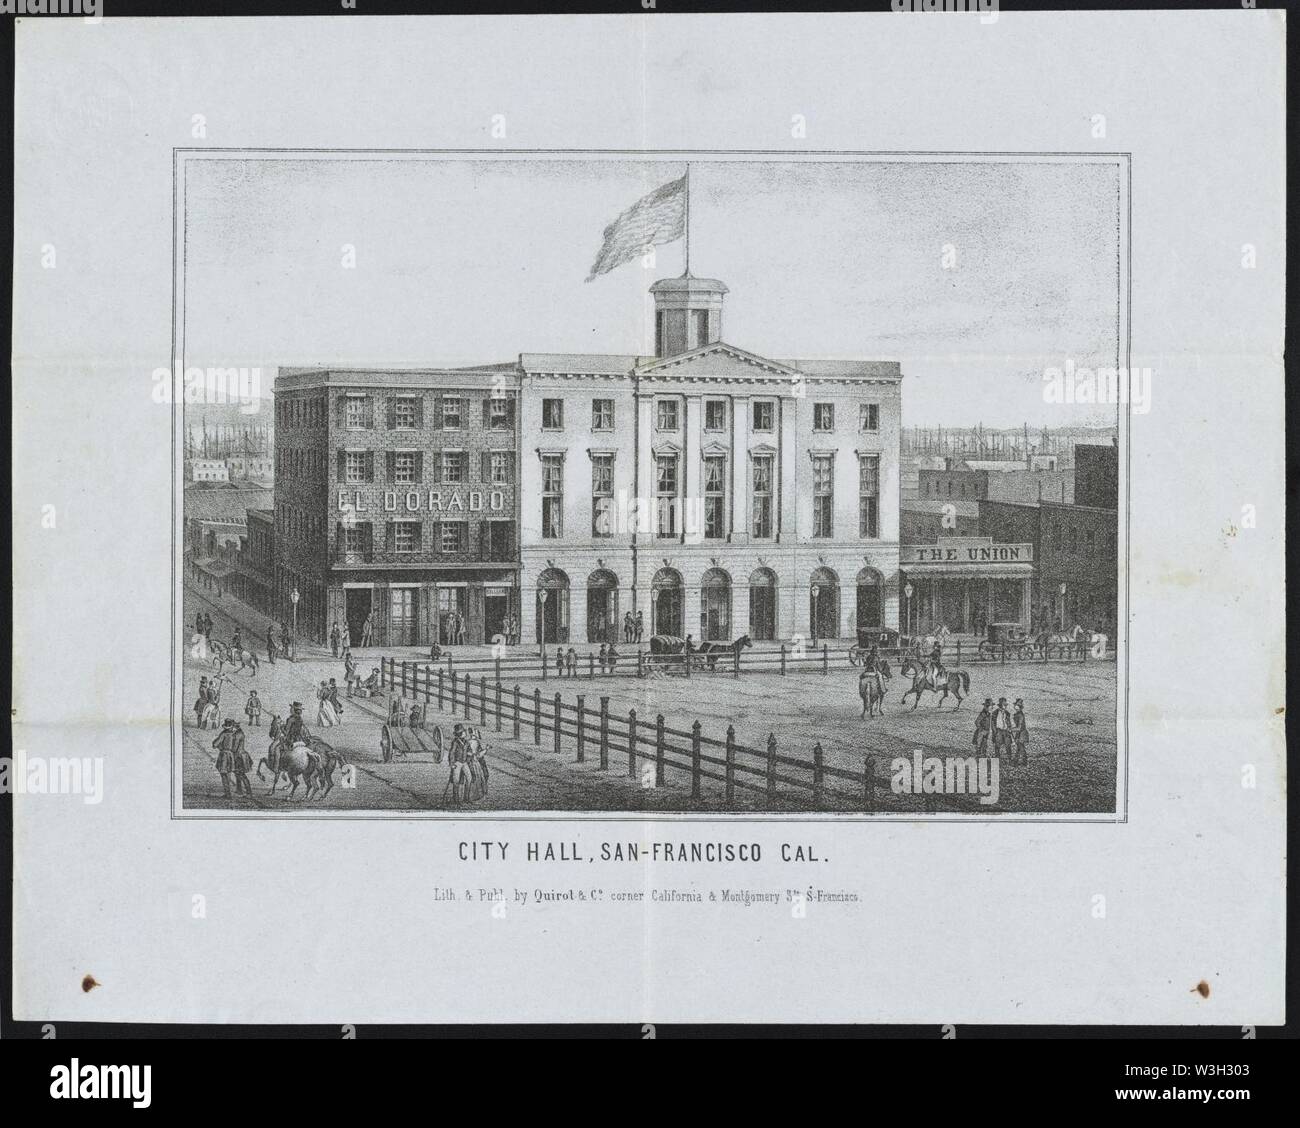 Rathaus, San-Francisco, Cal. - Lith. & Publ. Durch Quirot & Co., Ecke Kalifornien und Montgomery Sts., S. Francisco. Stockfoto